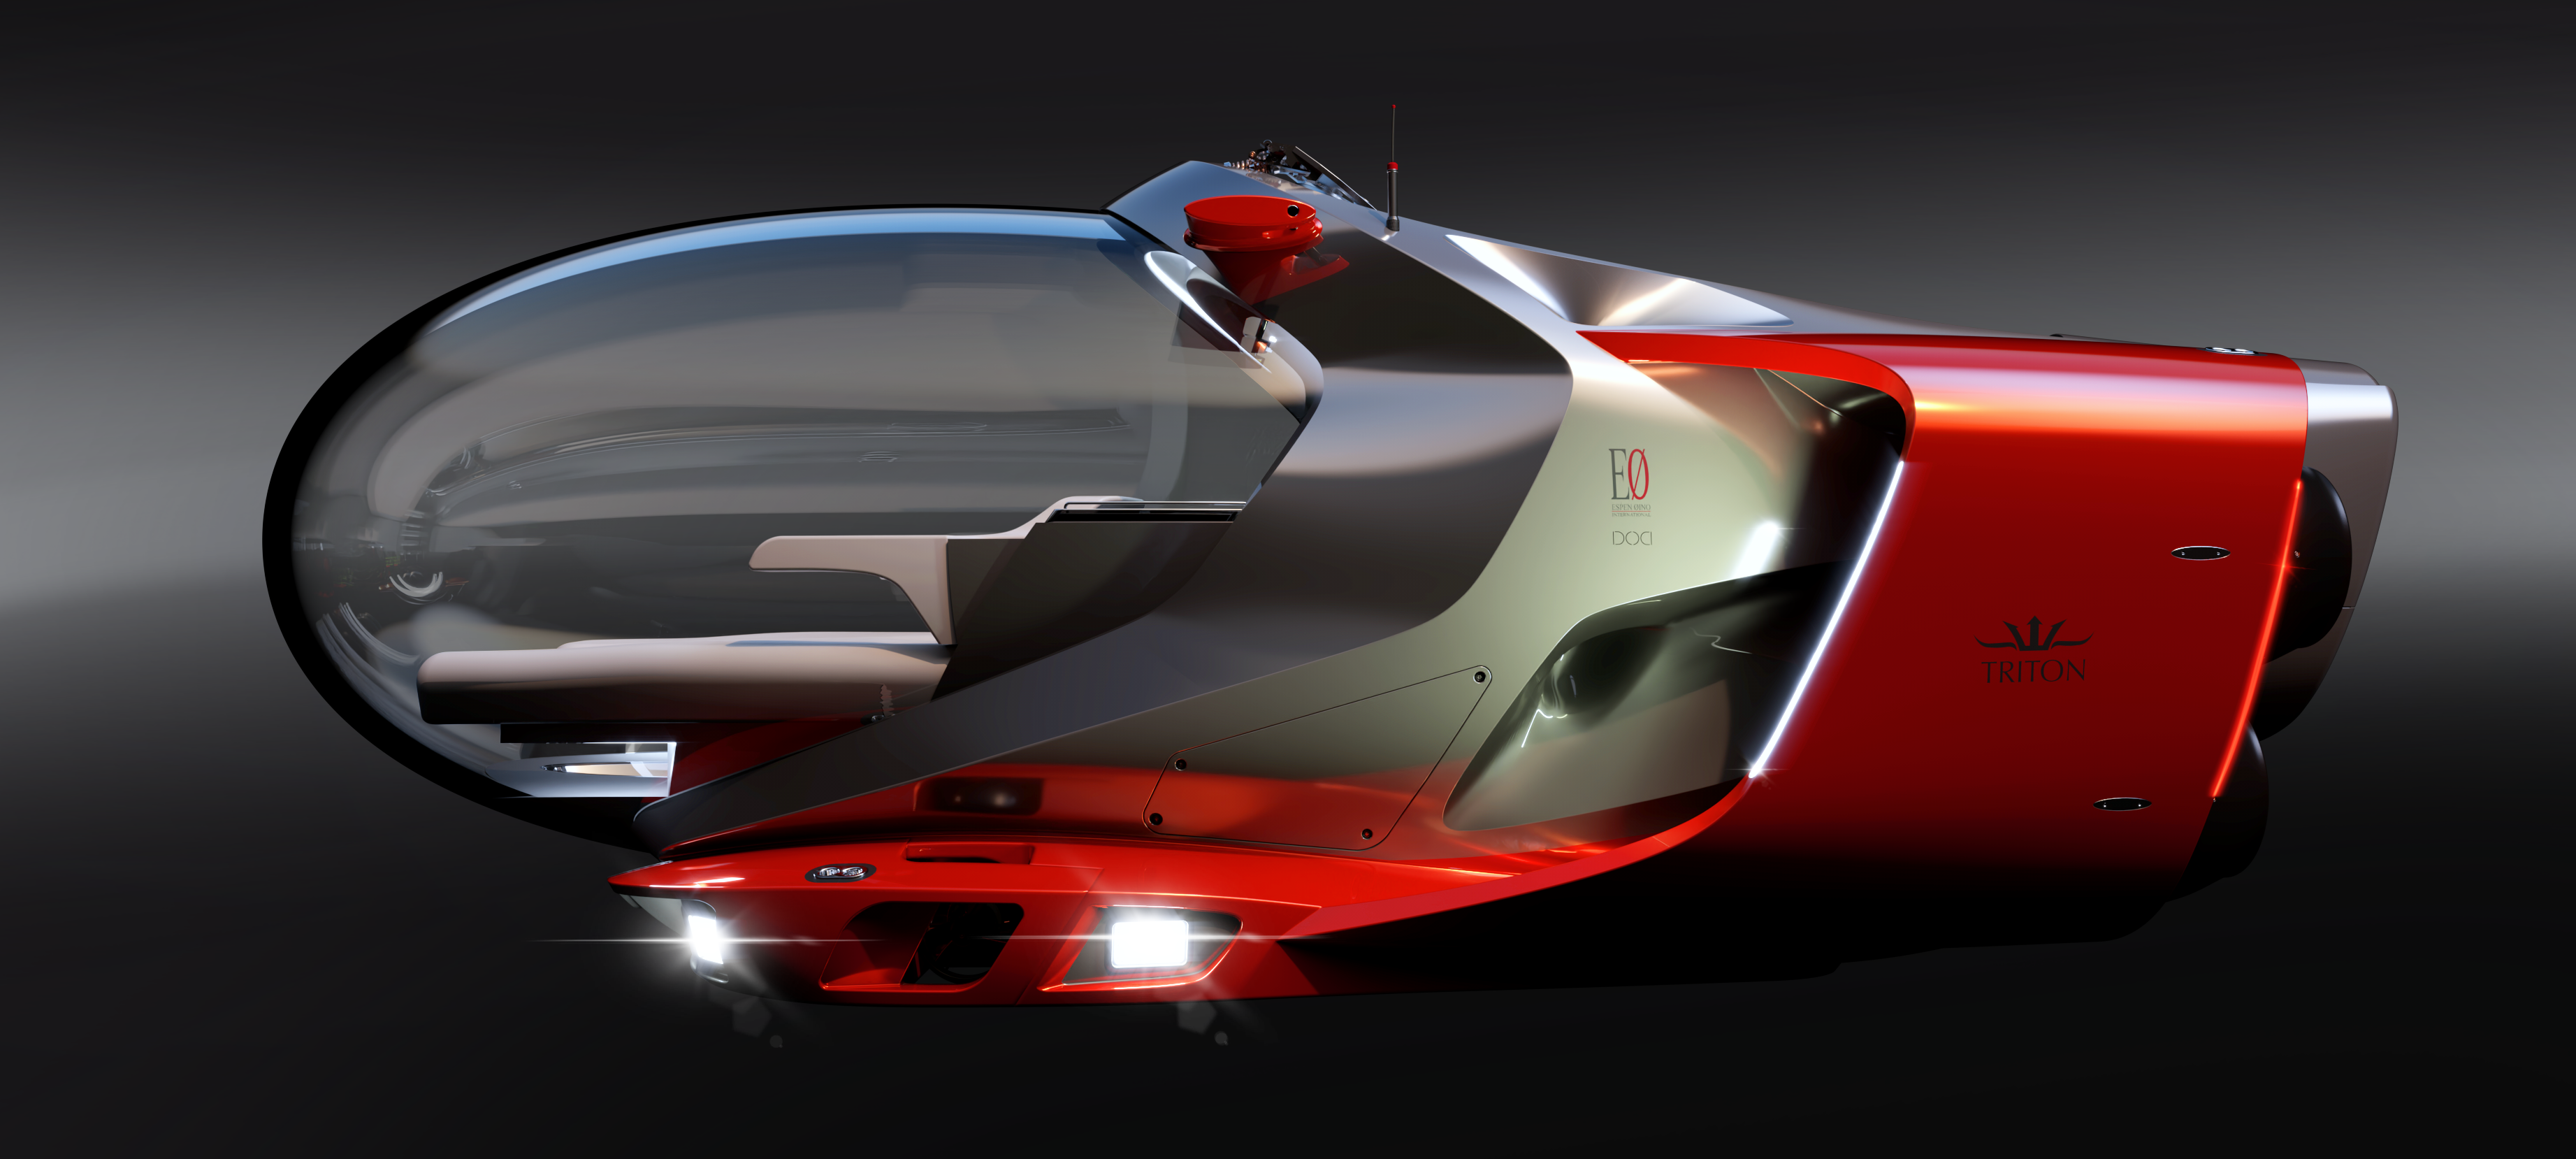 Triton & Aston Martin’s sleek and sculpted submersible.